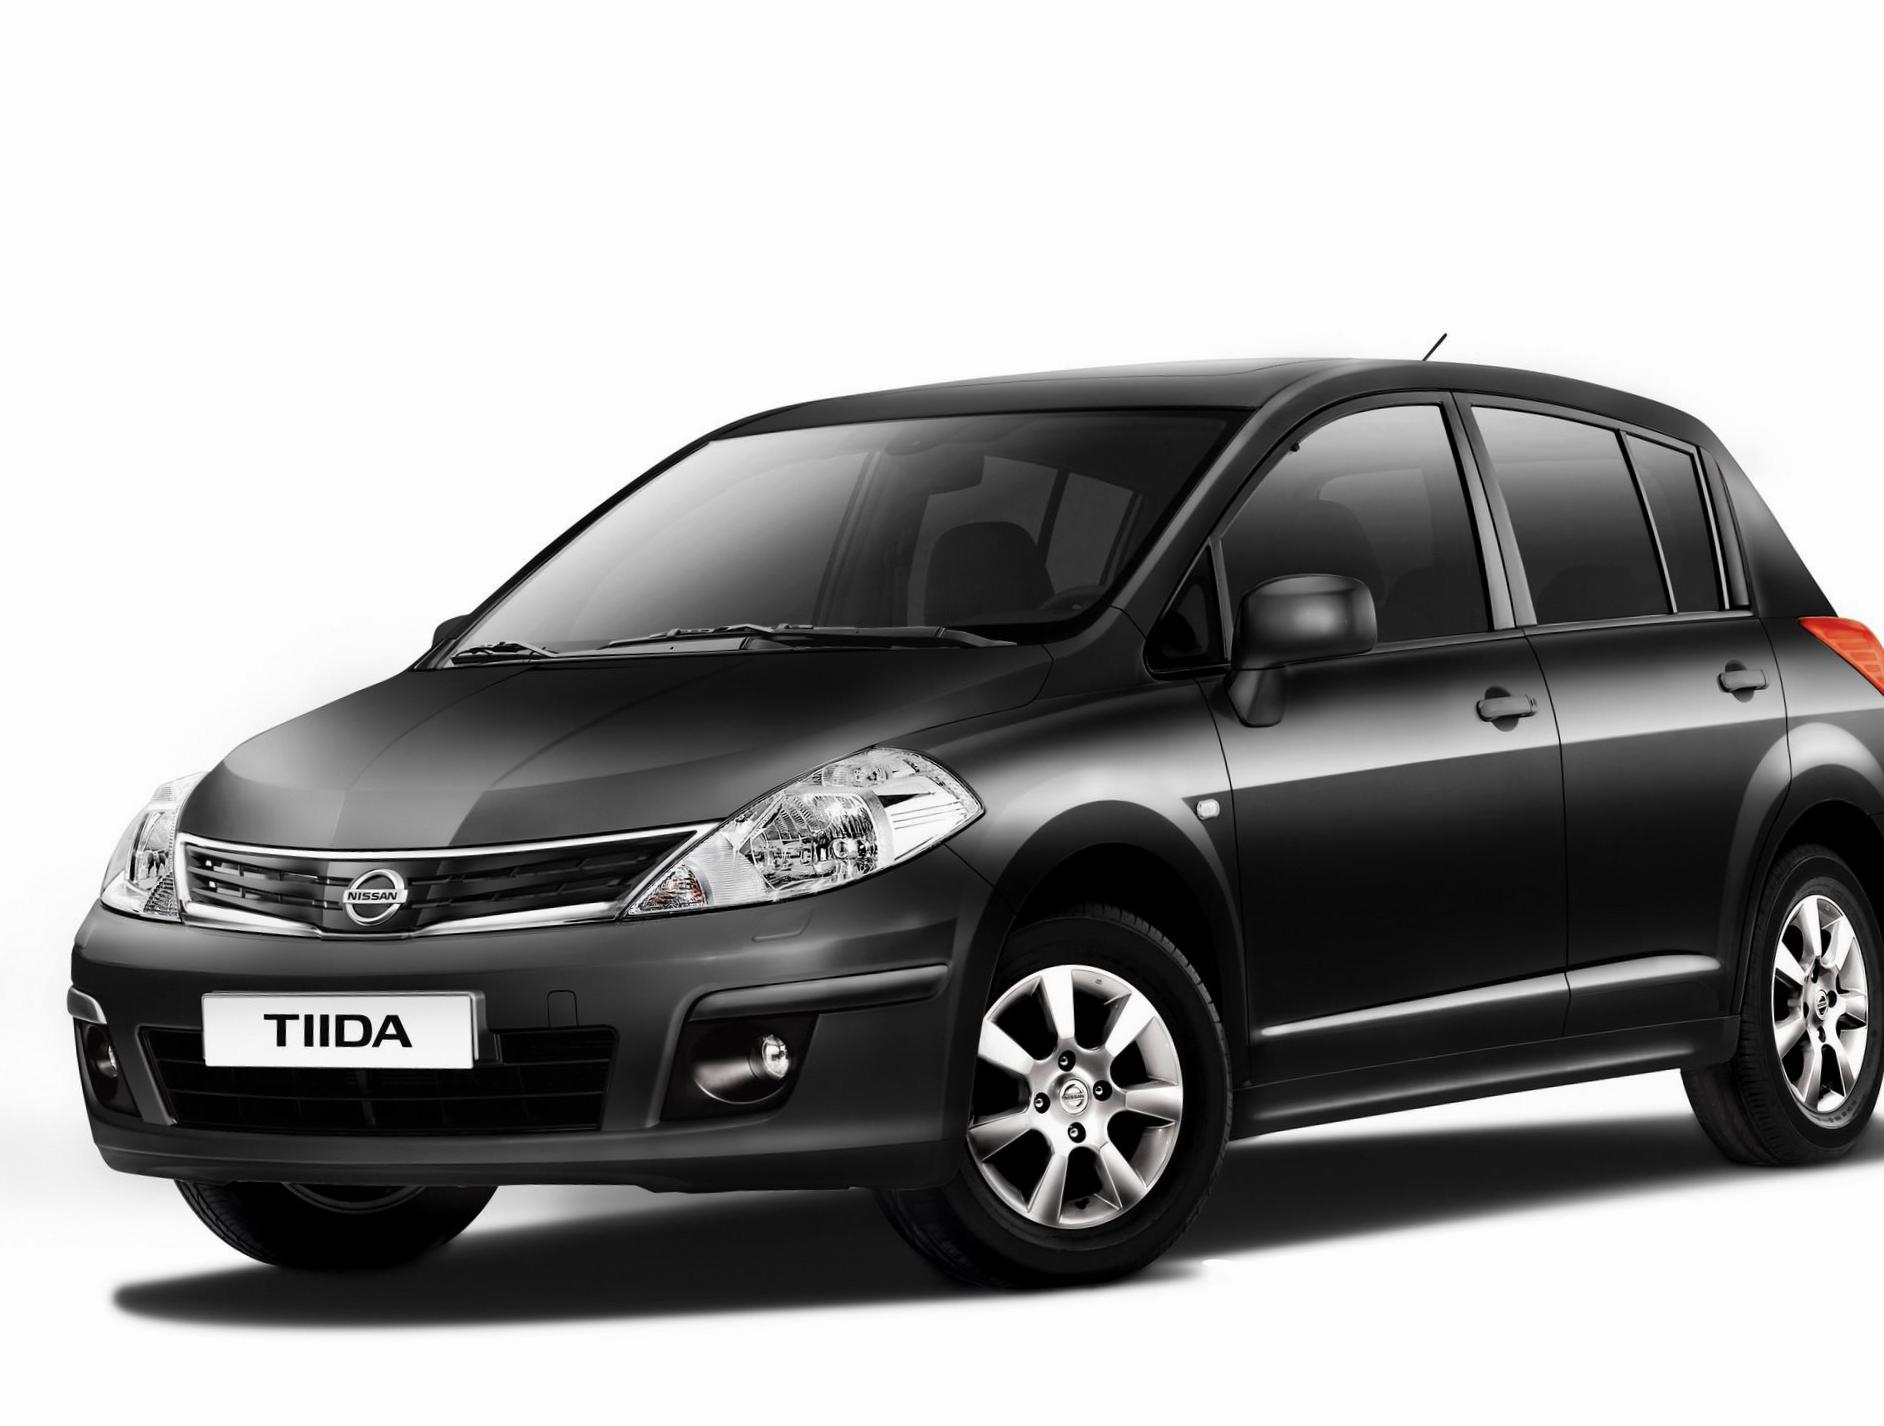 Tiida Hatchback Nissan Characteristics suv